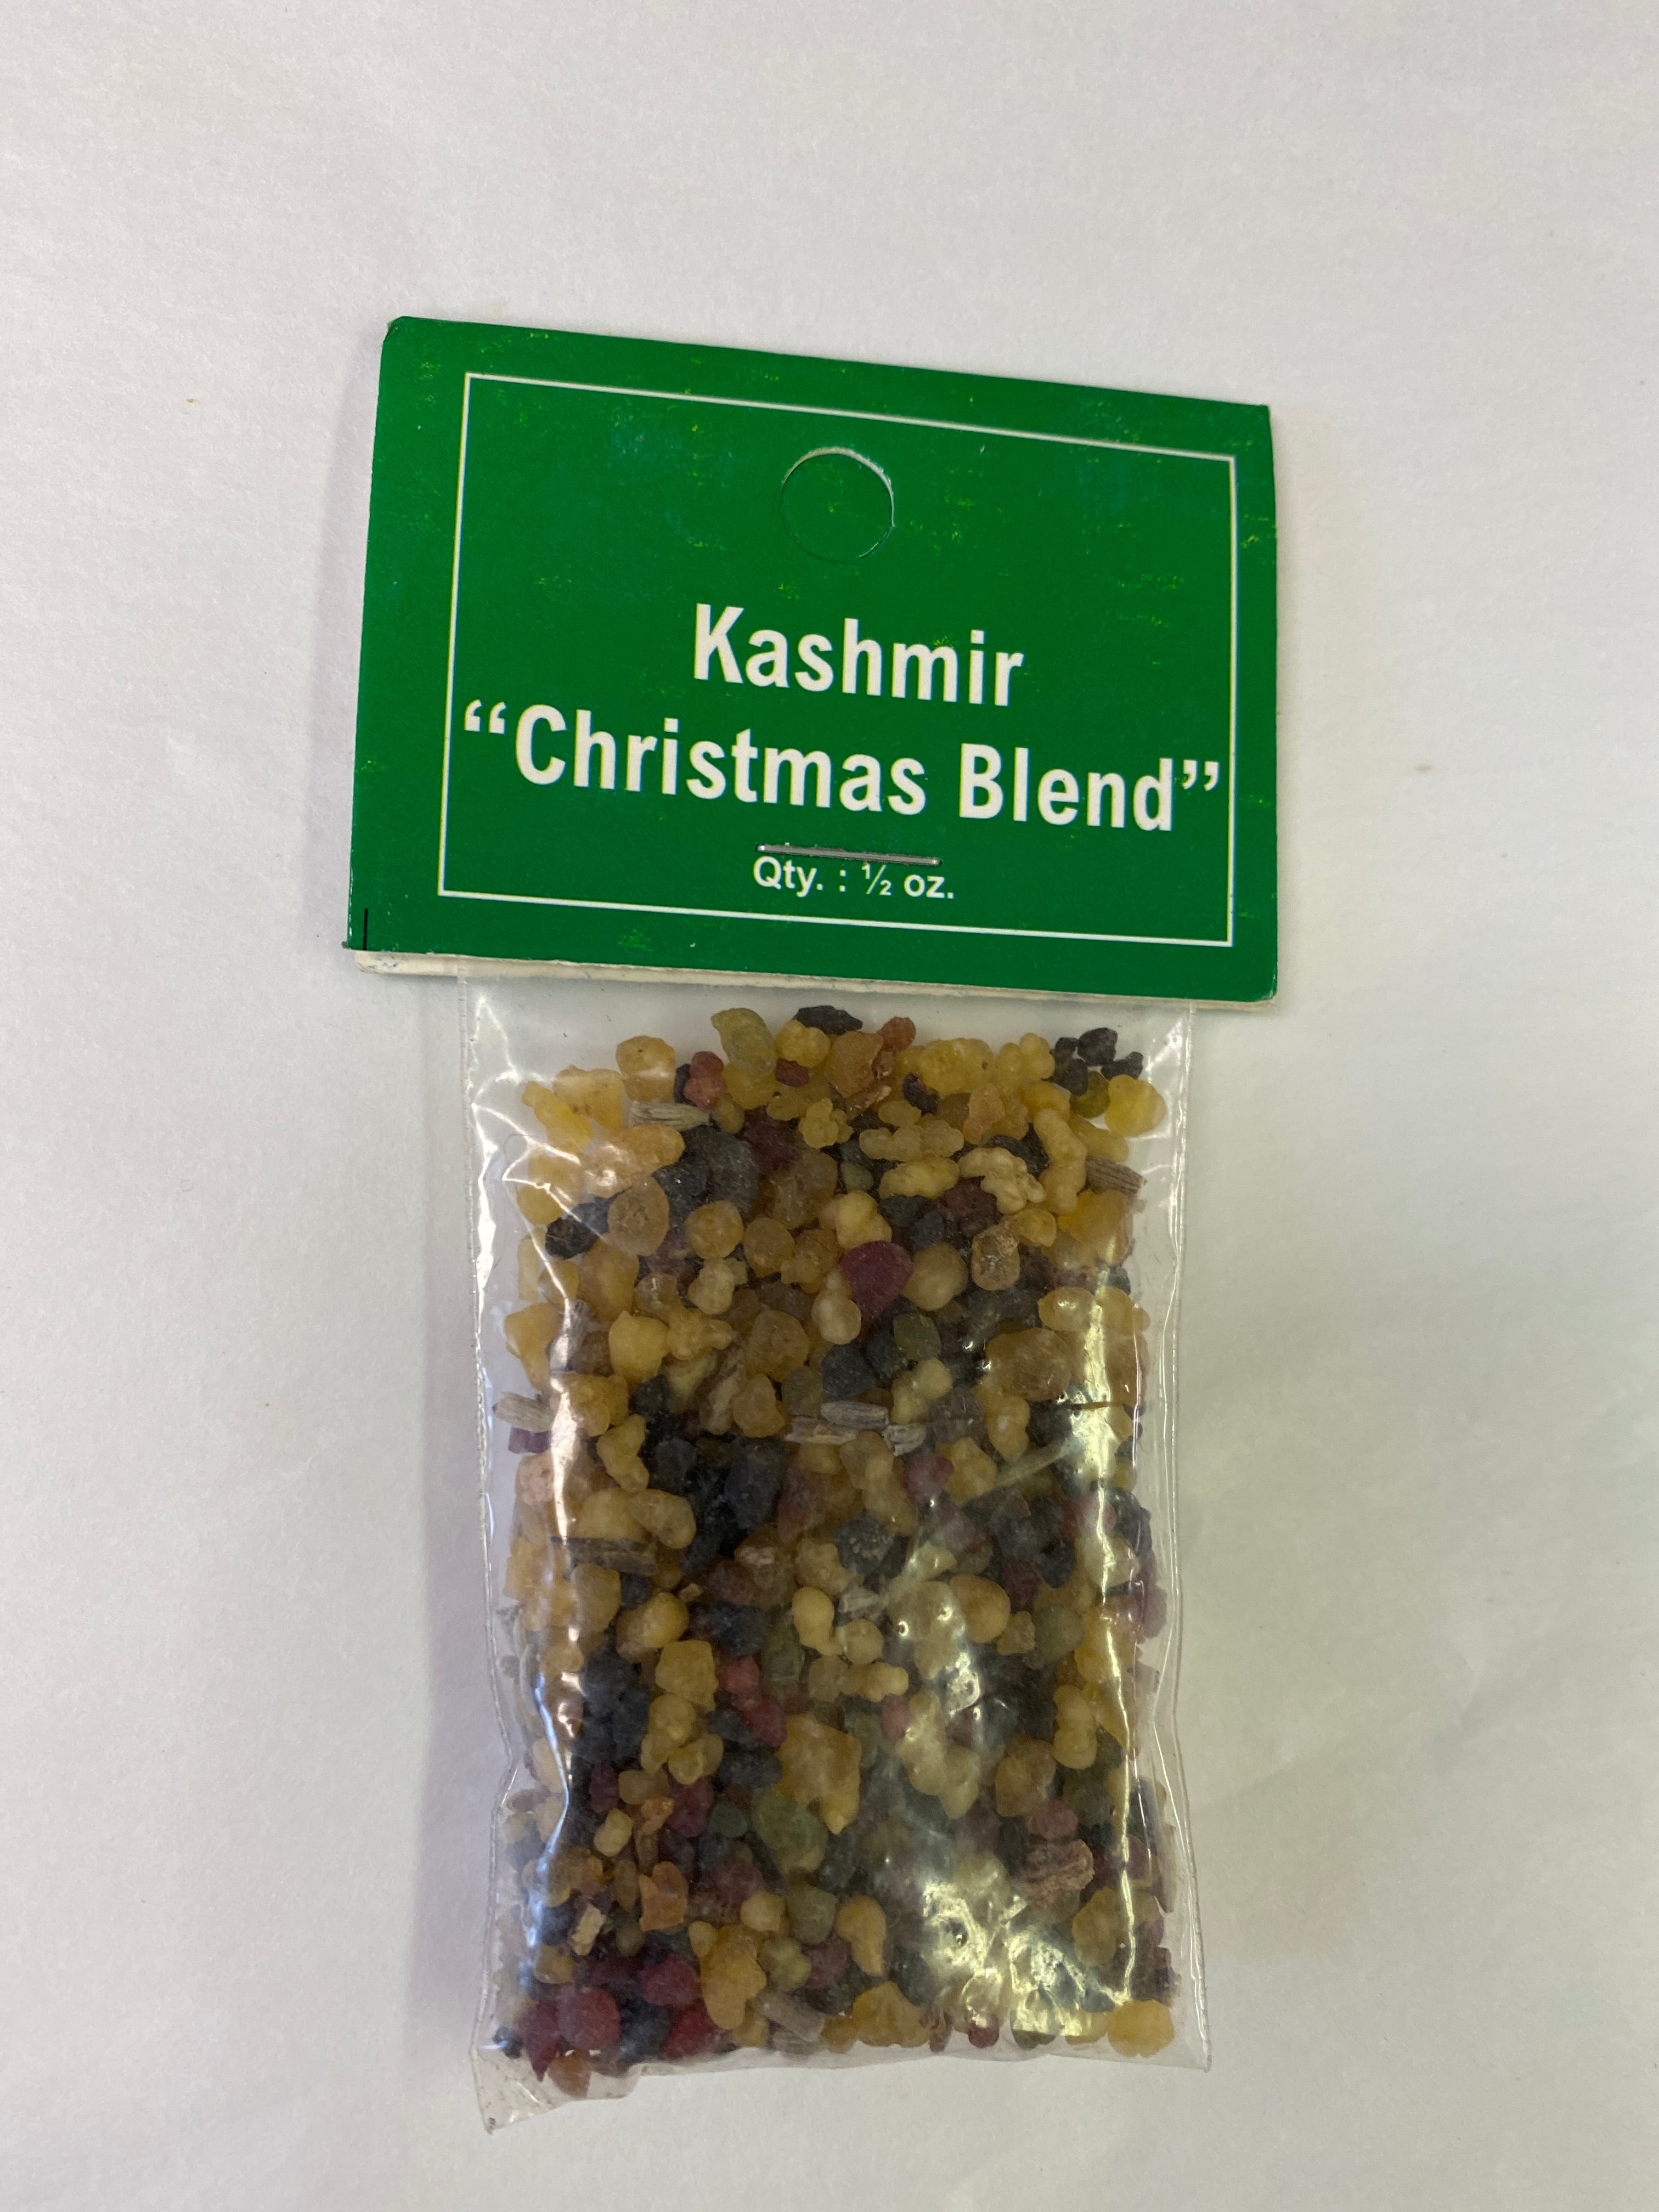 Kashmir Blend "Christmas" Resin Incense